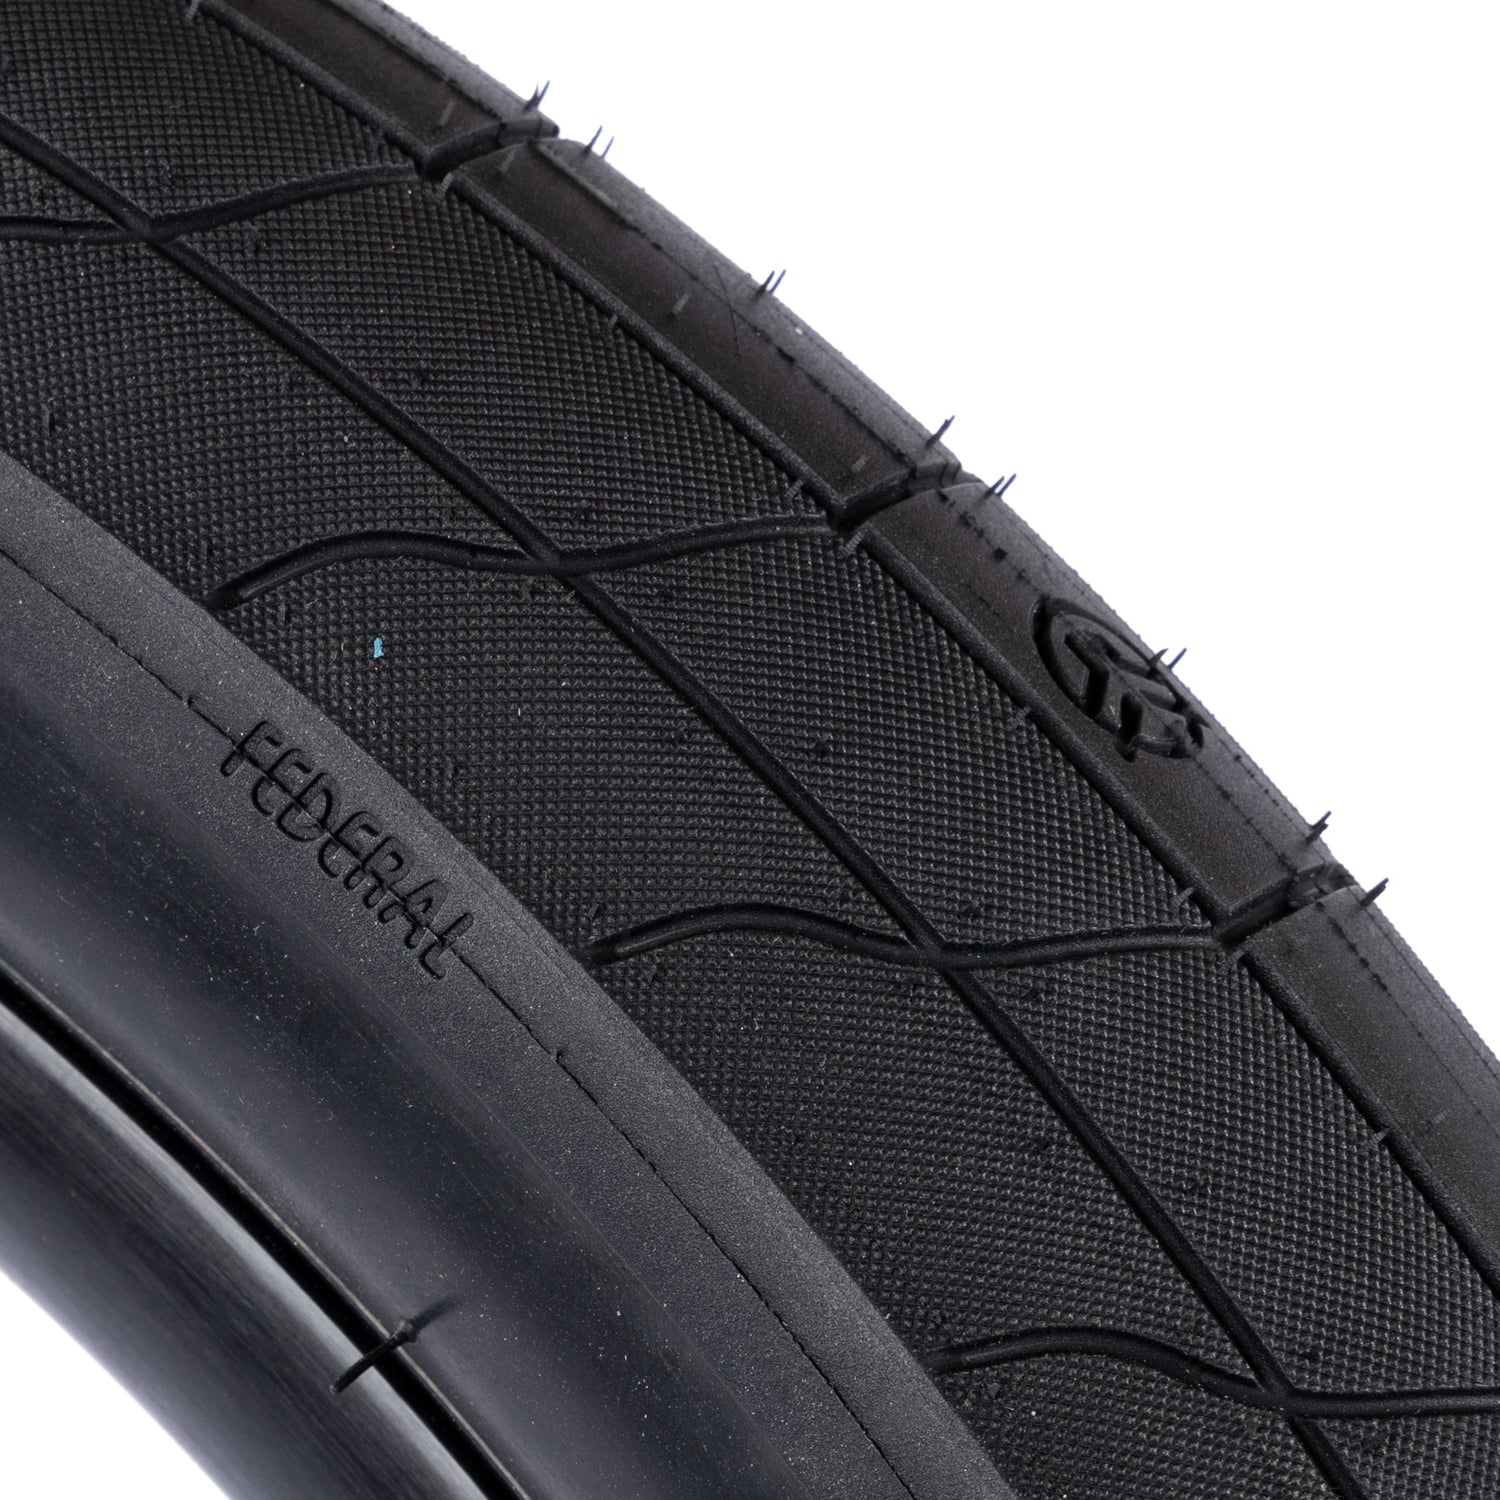 Federal Neptune Tyre - Black 2.35" | BMX